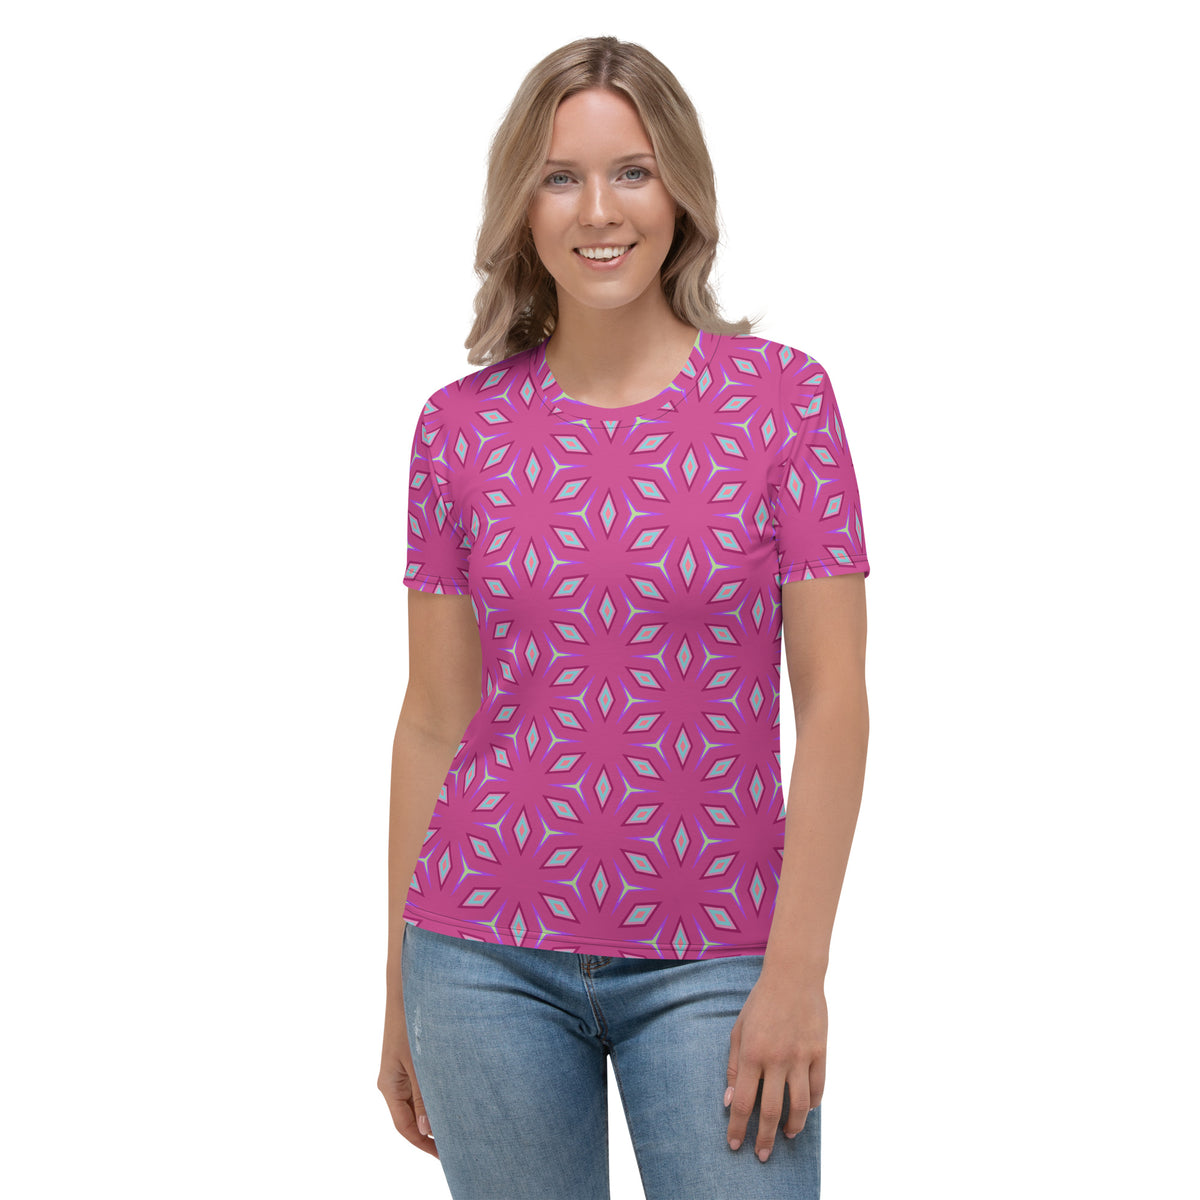 Mystic Mandala women's crewneck t-shirt with colorful design